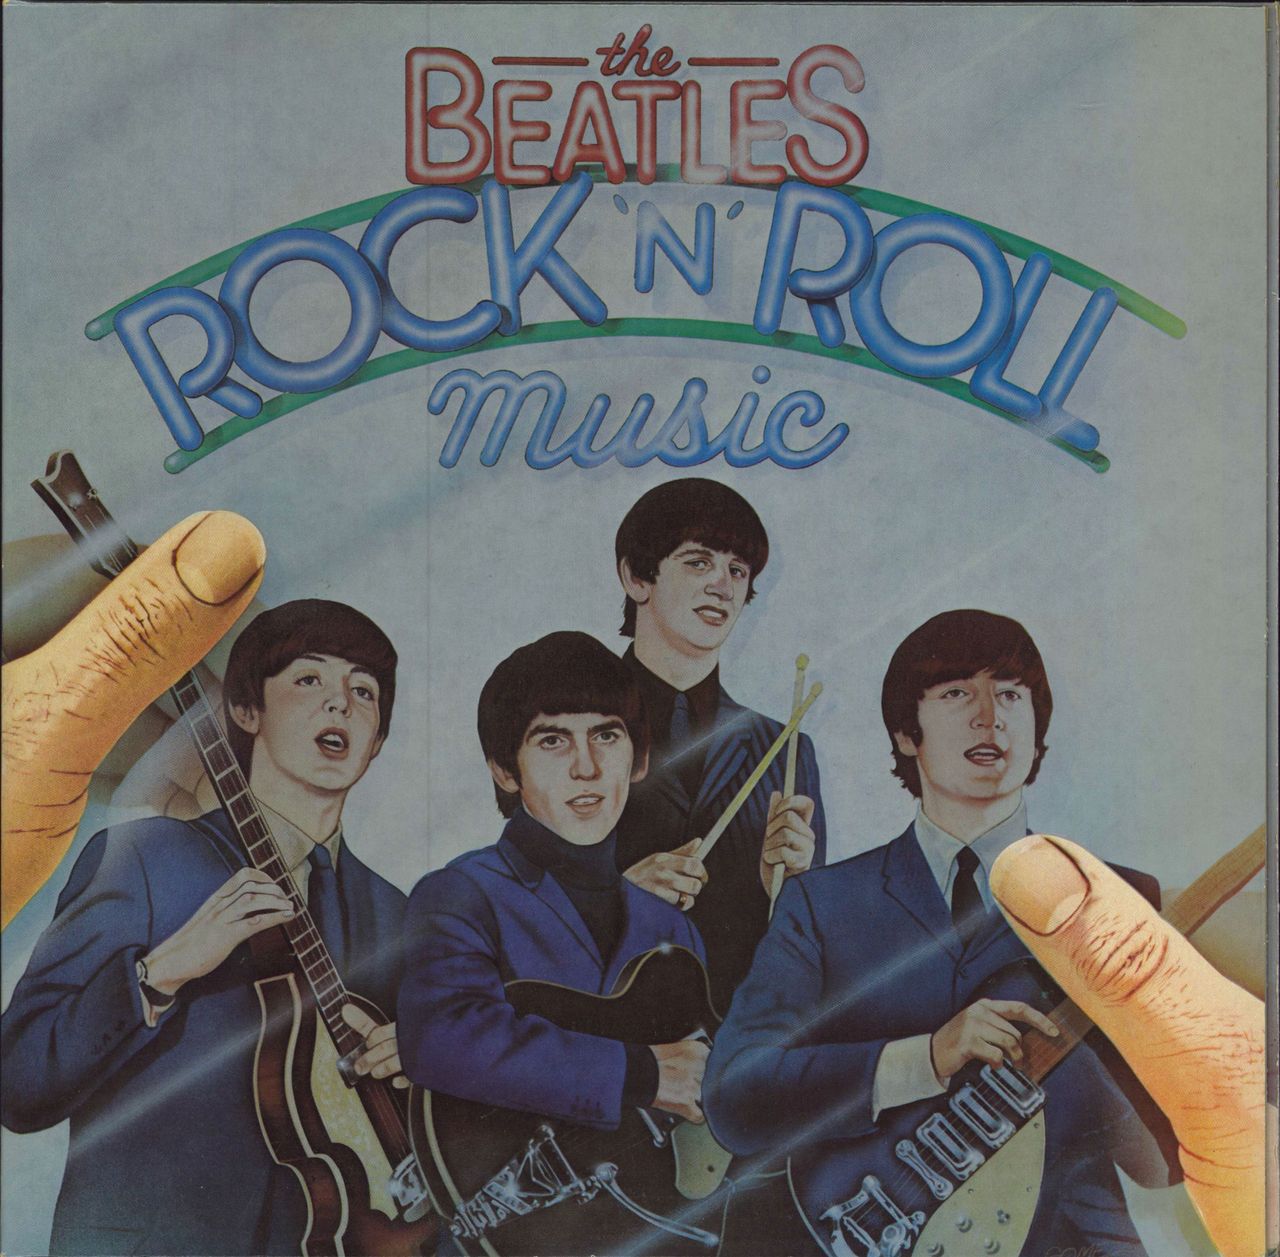 The Beatles Rock 'N' Roll Music German 2-LP vinyl record set (Double LP Album) 1C17806137/138